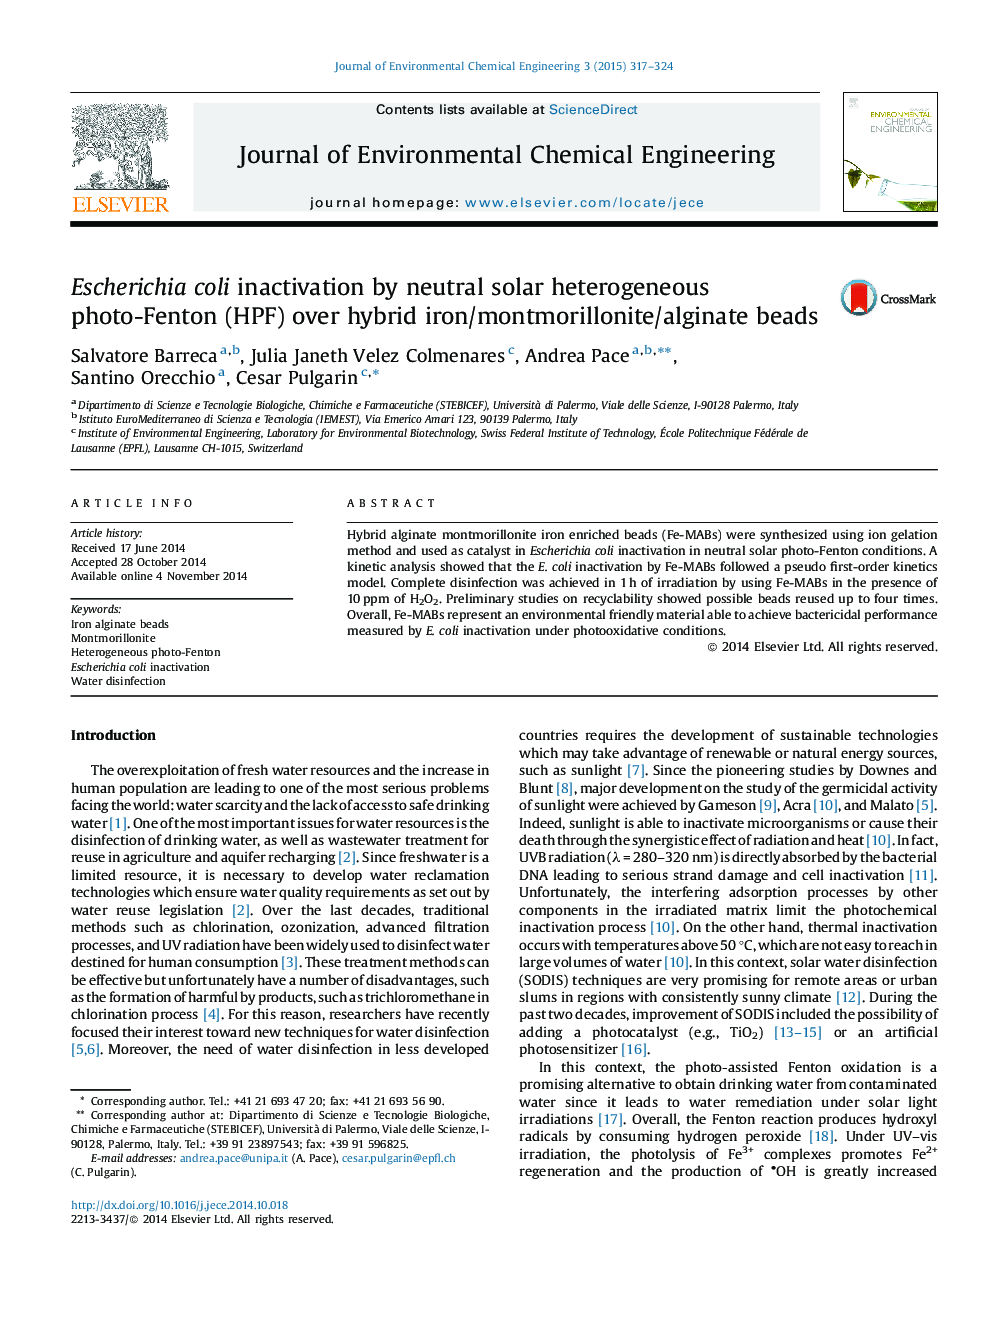 Escherichia coli inactivation by neutral solar heterogeneous photo-Fenton (HPF) over hybrid iron/montmorillonite/alginate beads